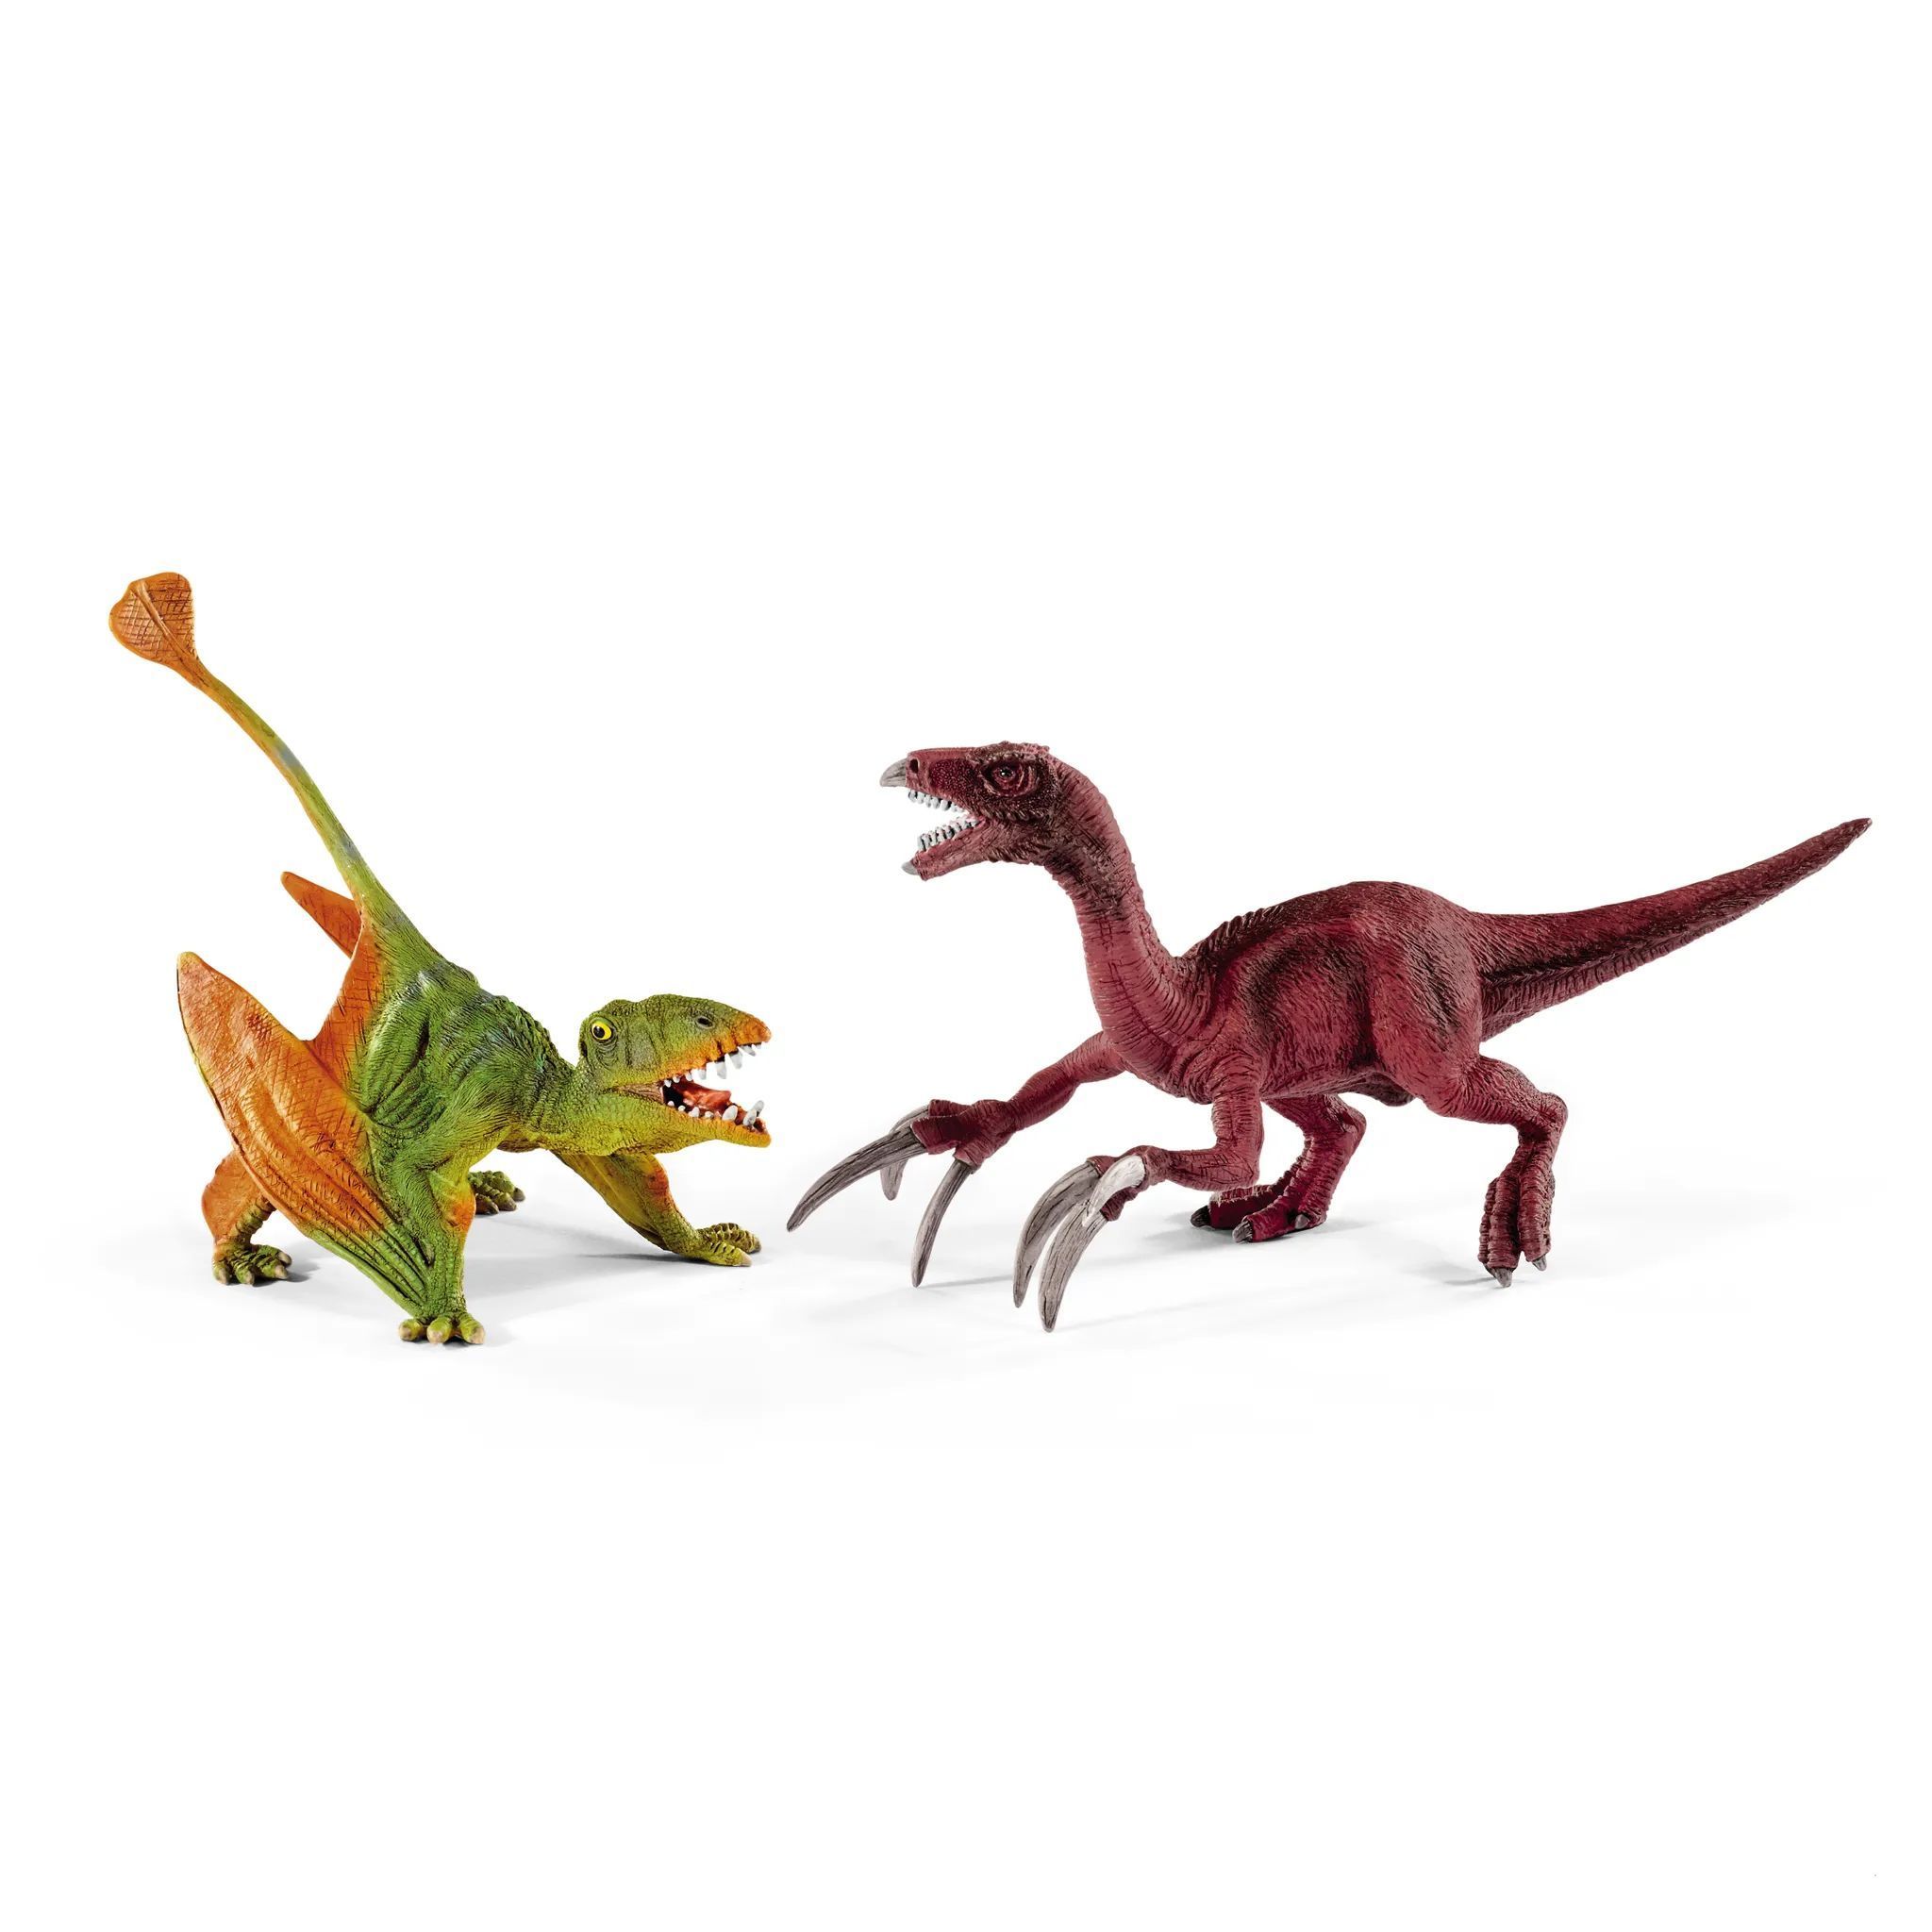 Schleich – Tierfiguren, Dimorphodon und Therizinosaurus, klein; 41425